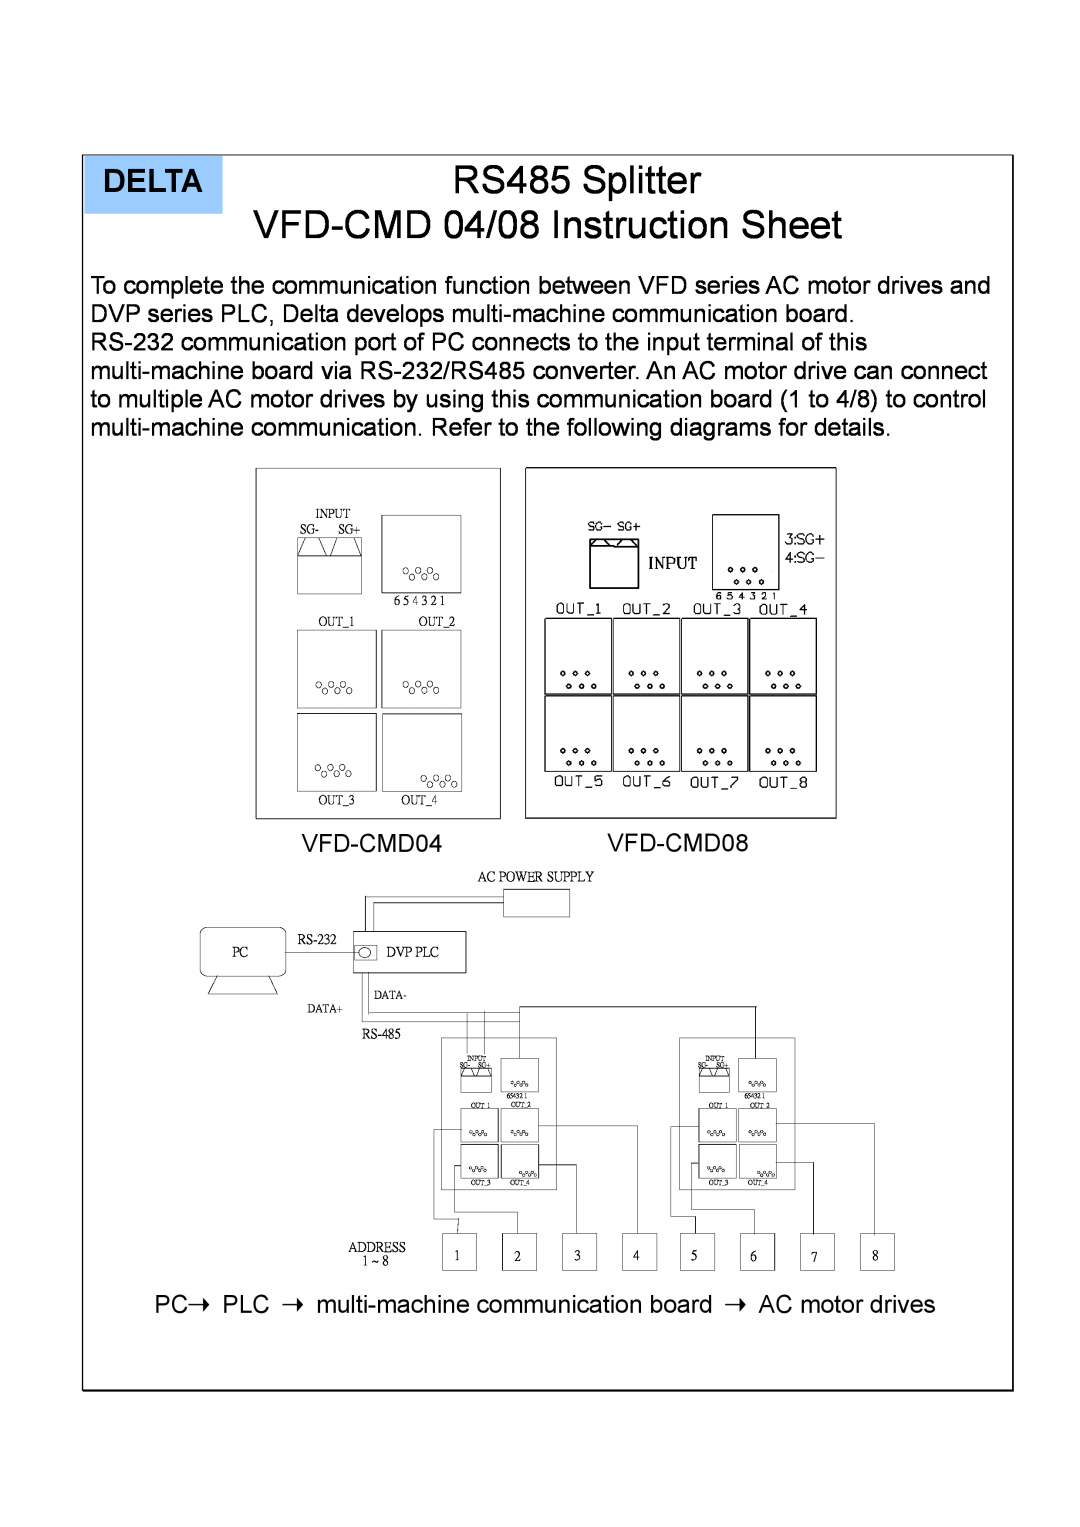 Delta Electronics RS-232 instruction sheet Delta, RS485 Splitter, VFD-CMD04/08 Instruction Sheet 